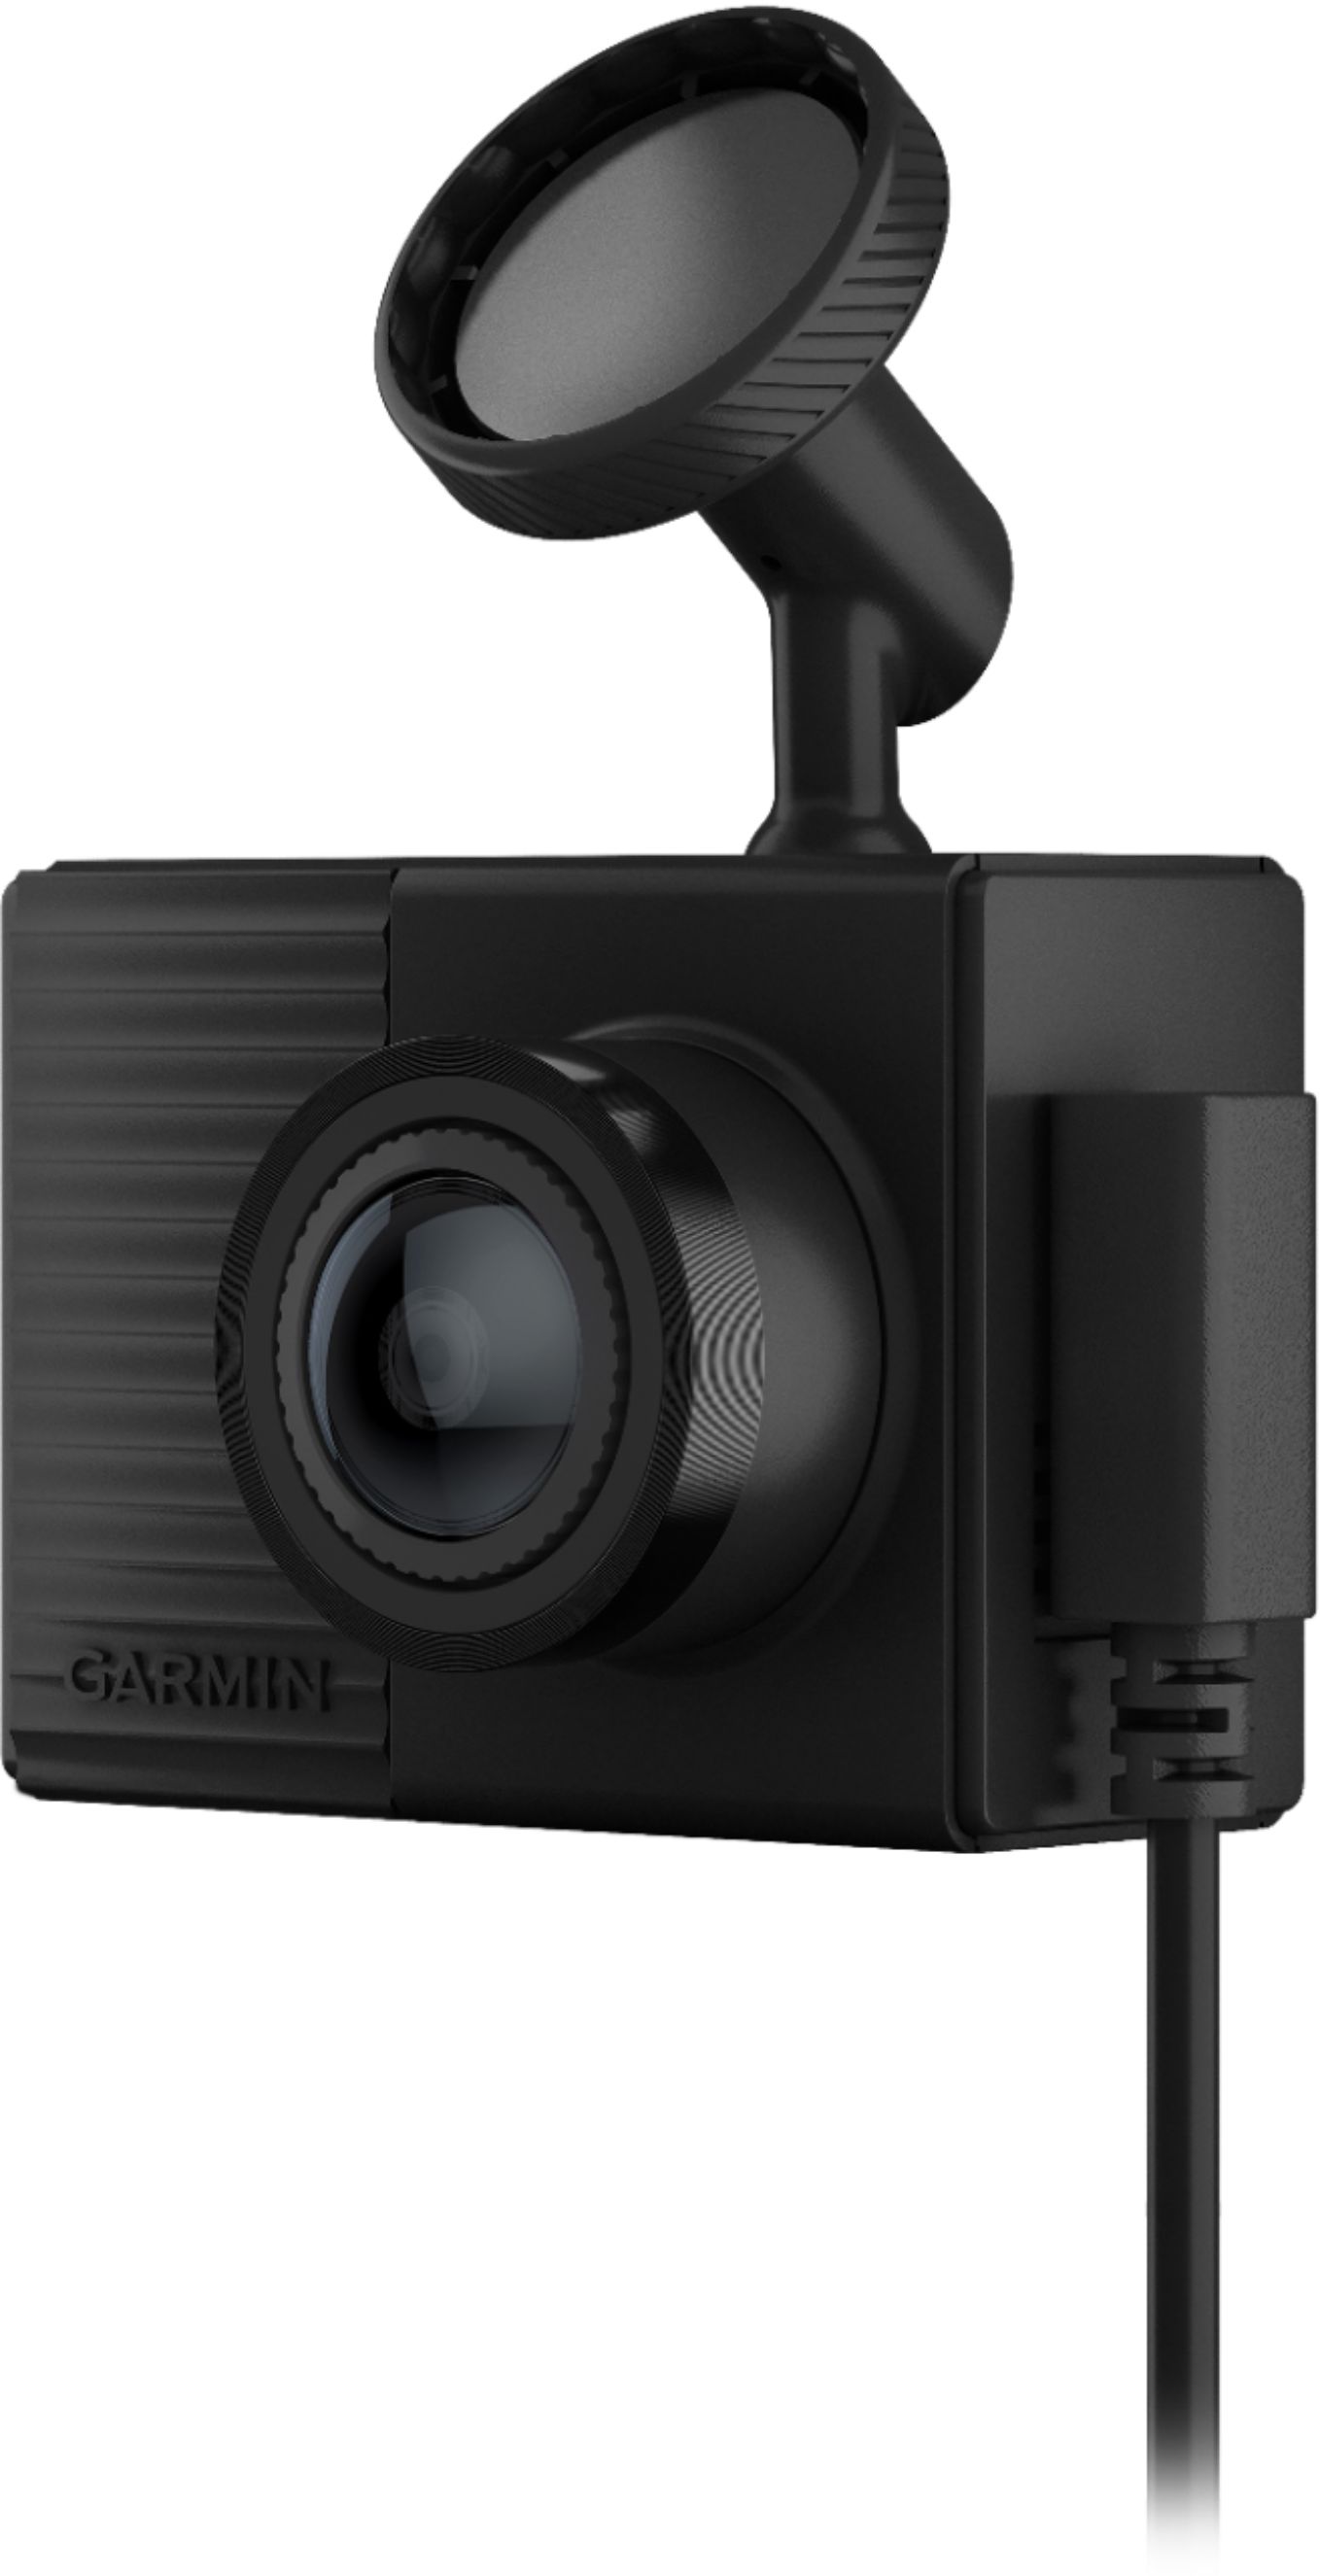  Garmin Dash Cam Tandem - Dual 1440p Front and 720p Interior  Night Vision Lenses : Everything Else